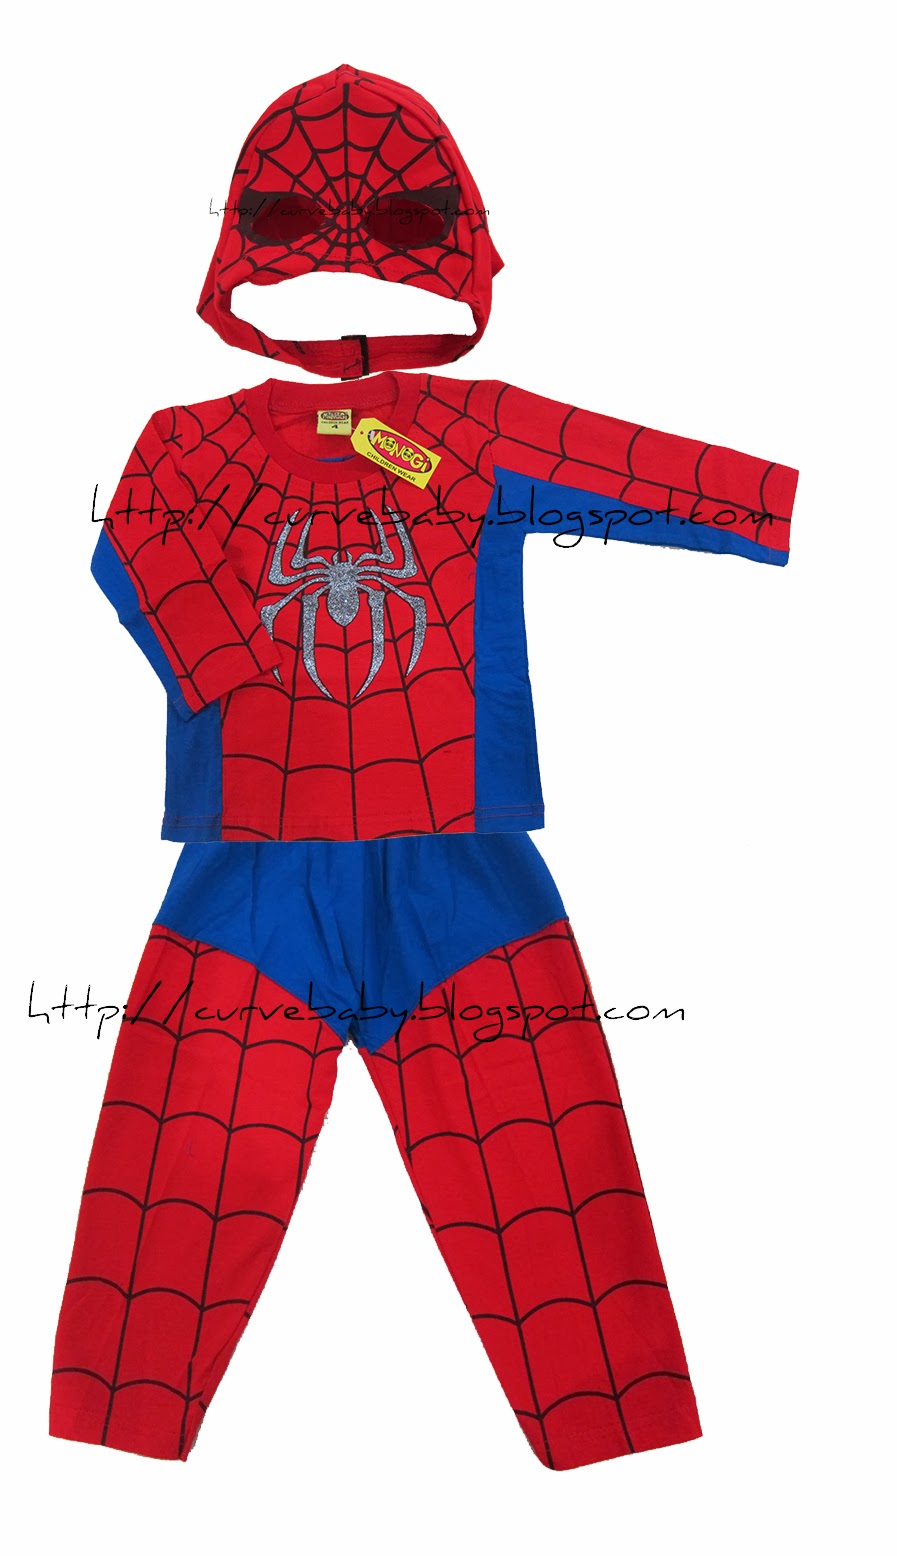 CurVe Baby: Superheroes Costume Series (Ironman, Batman, Spiderman)